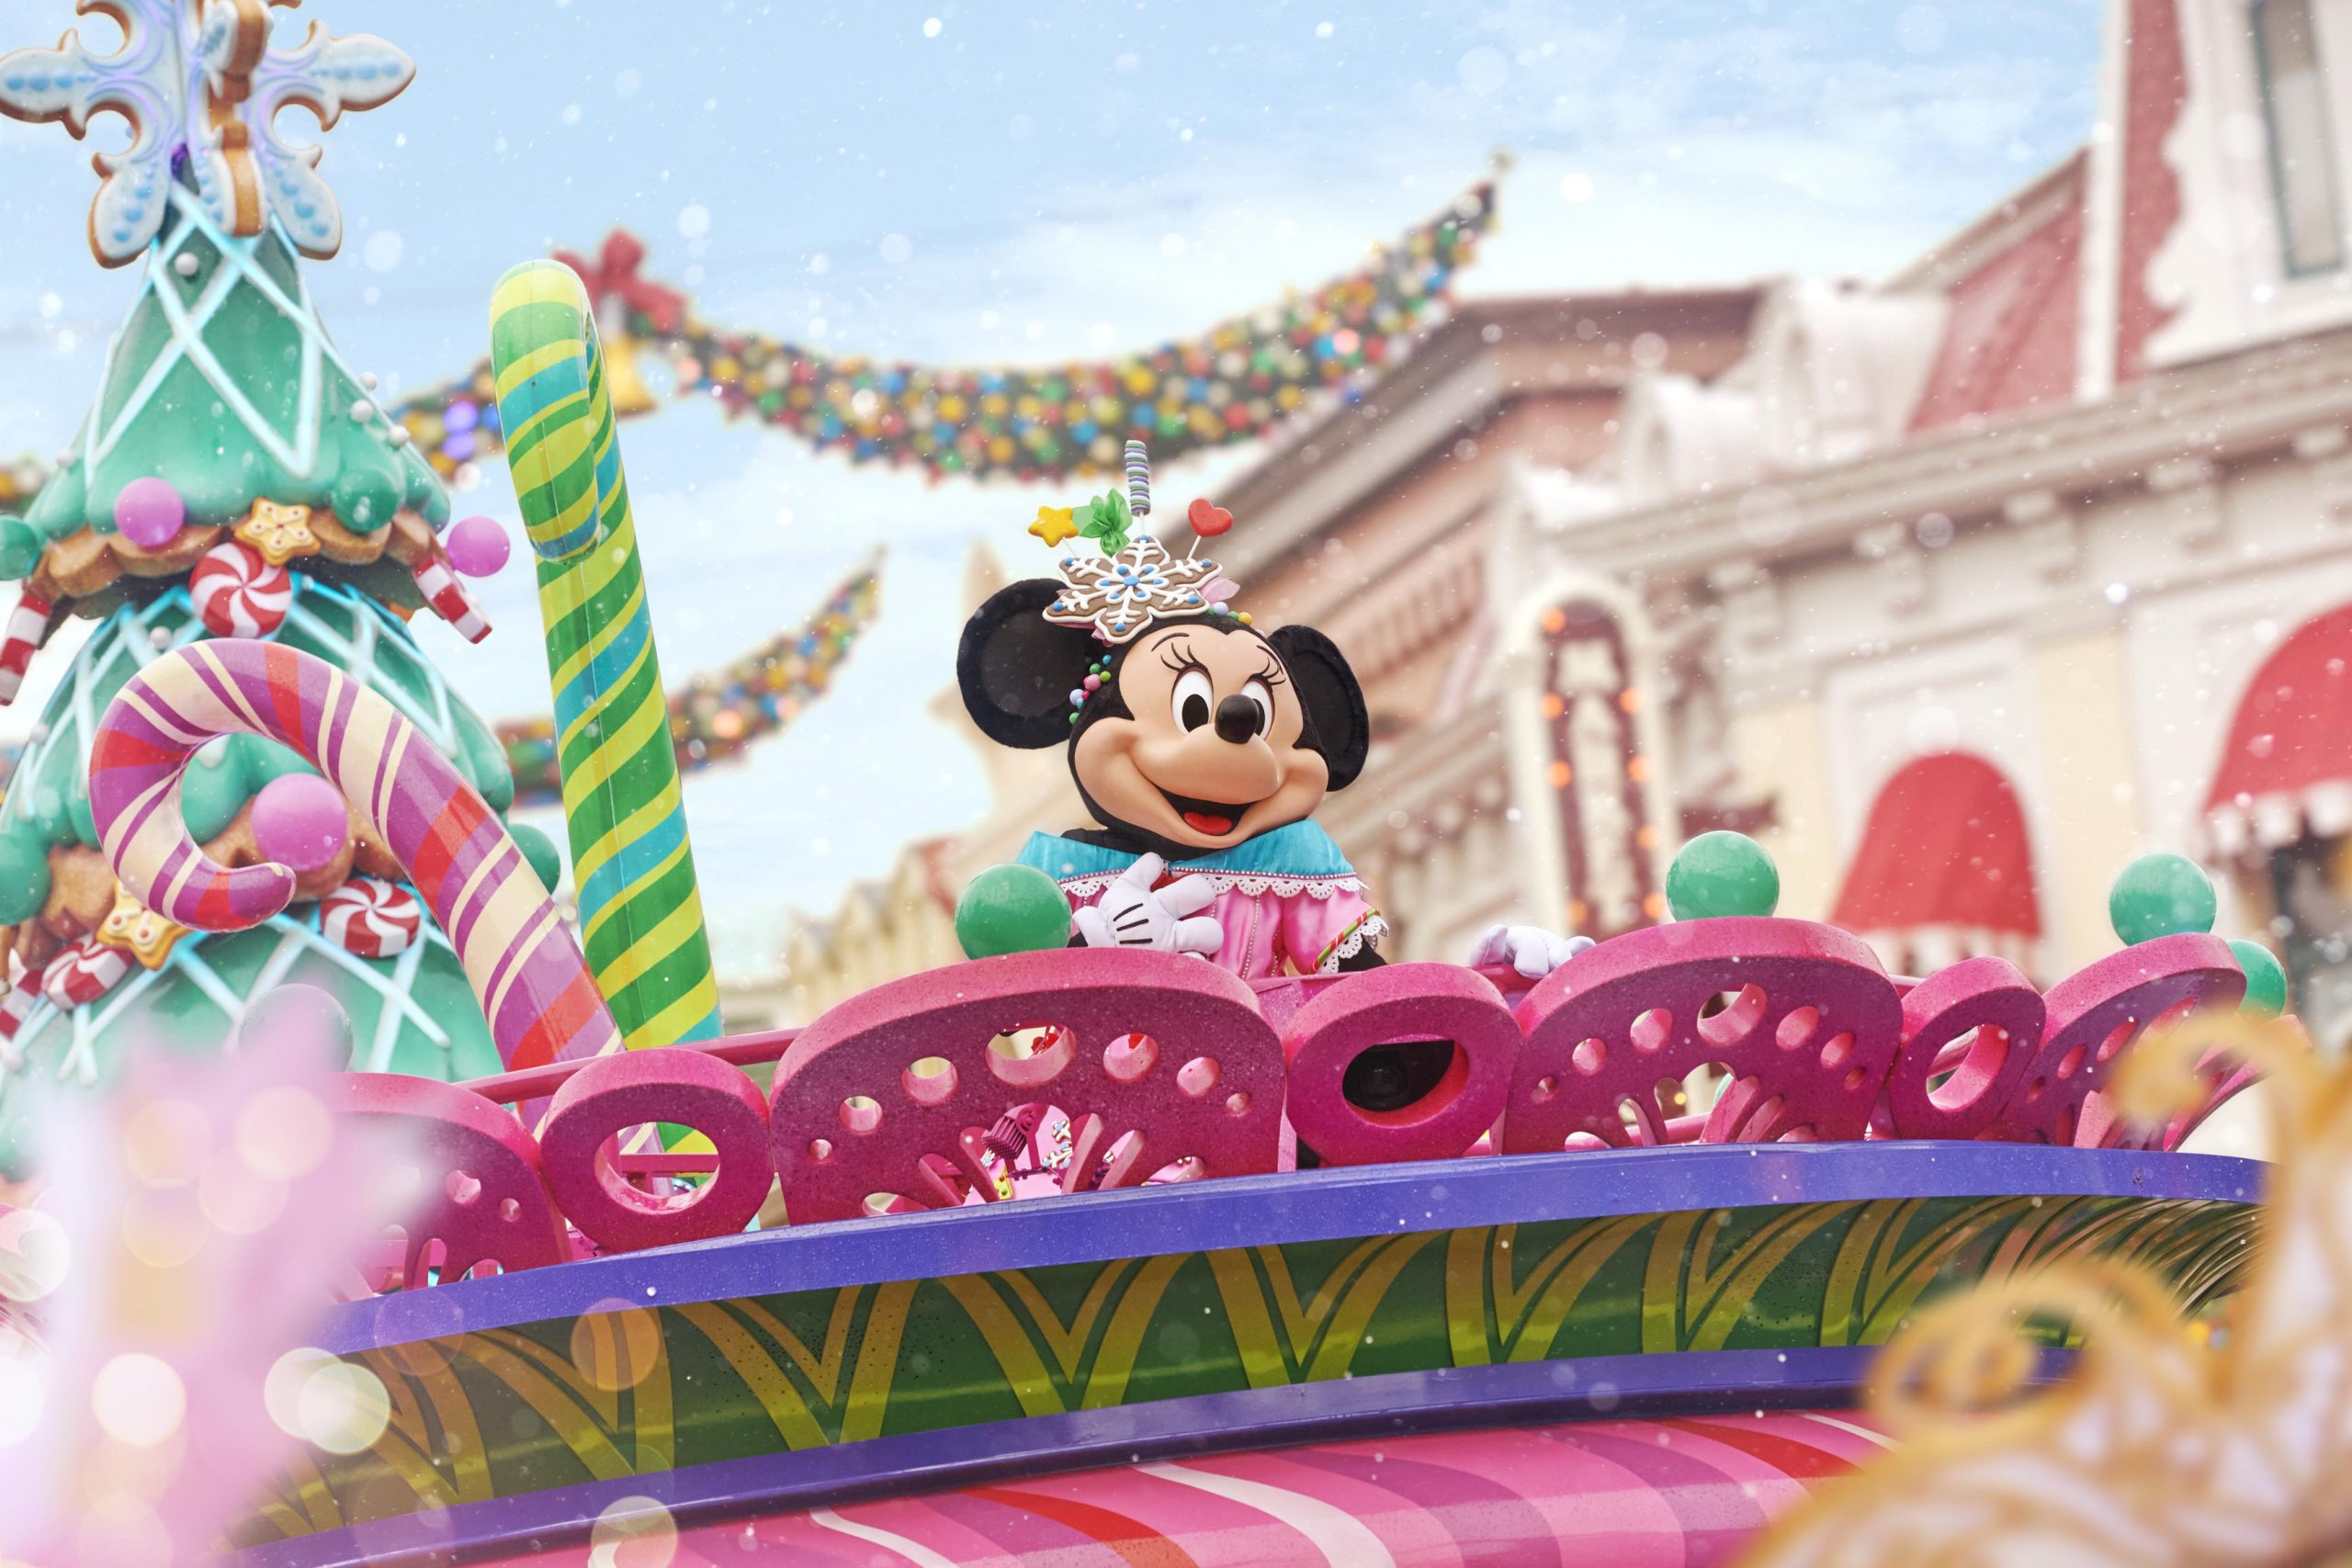 The Magic of the Christmas Season Returns to Disneyland Paris!